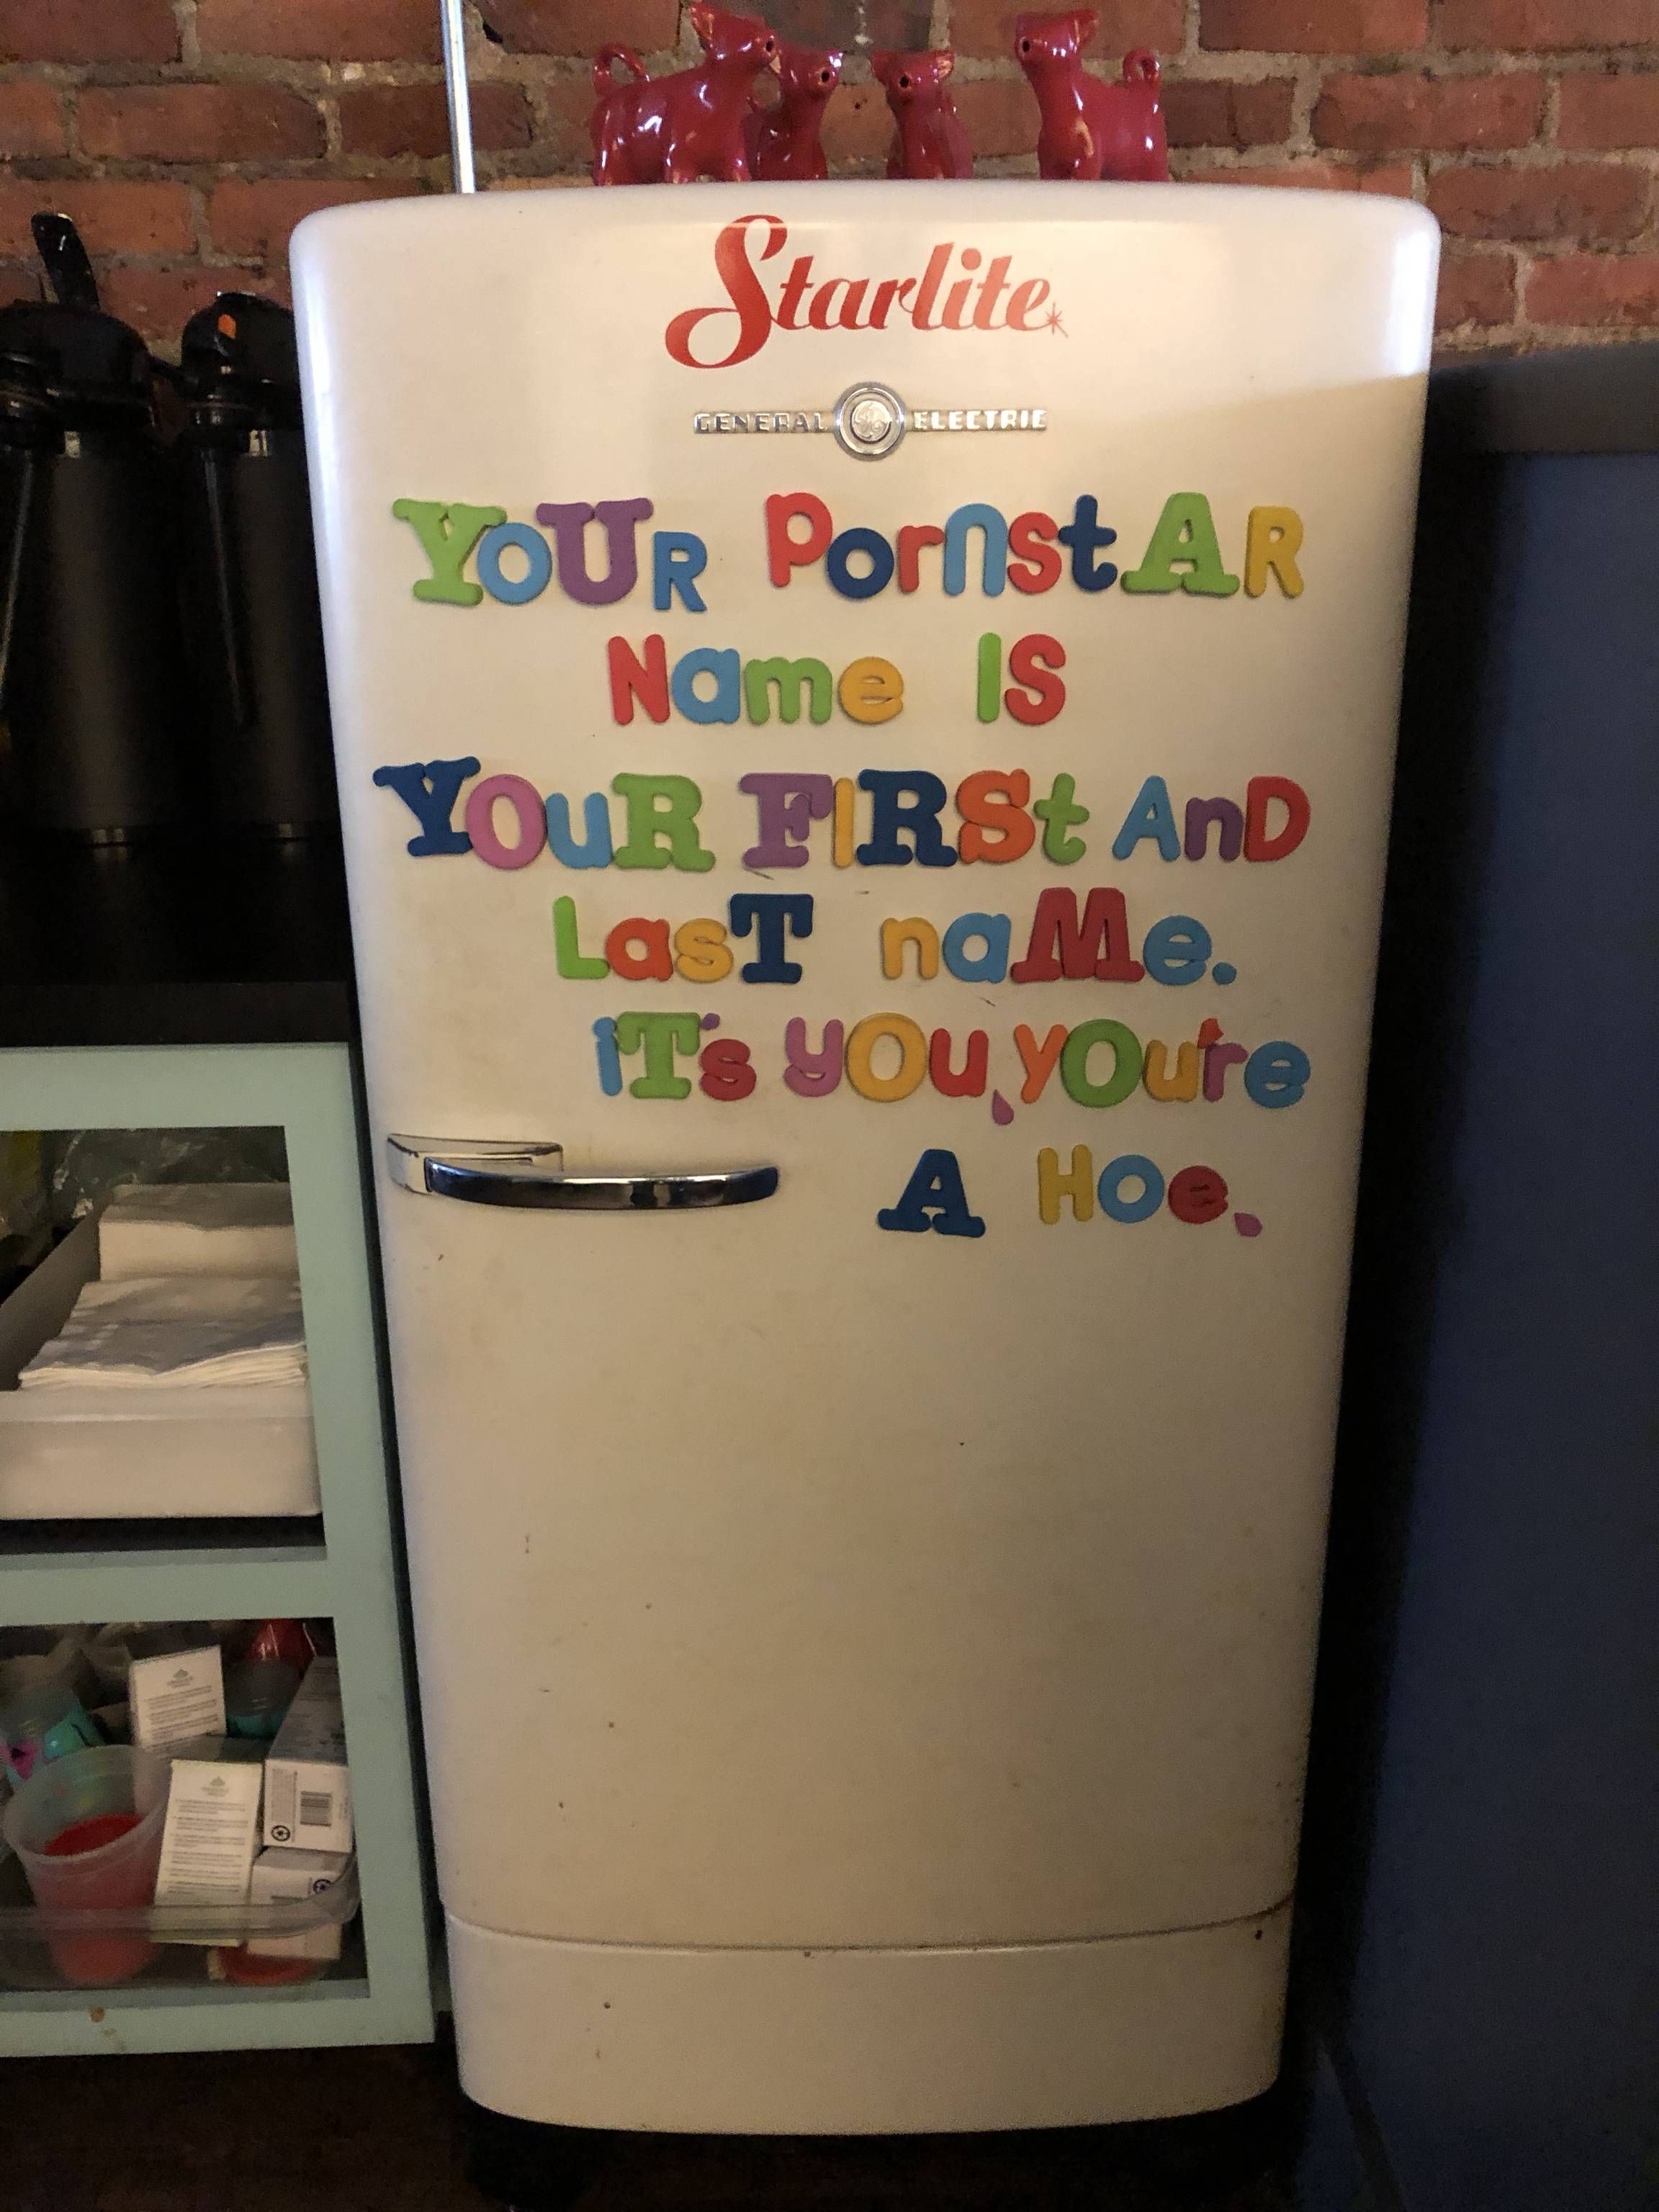 Found on a restaurant’s fridge